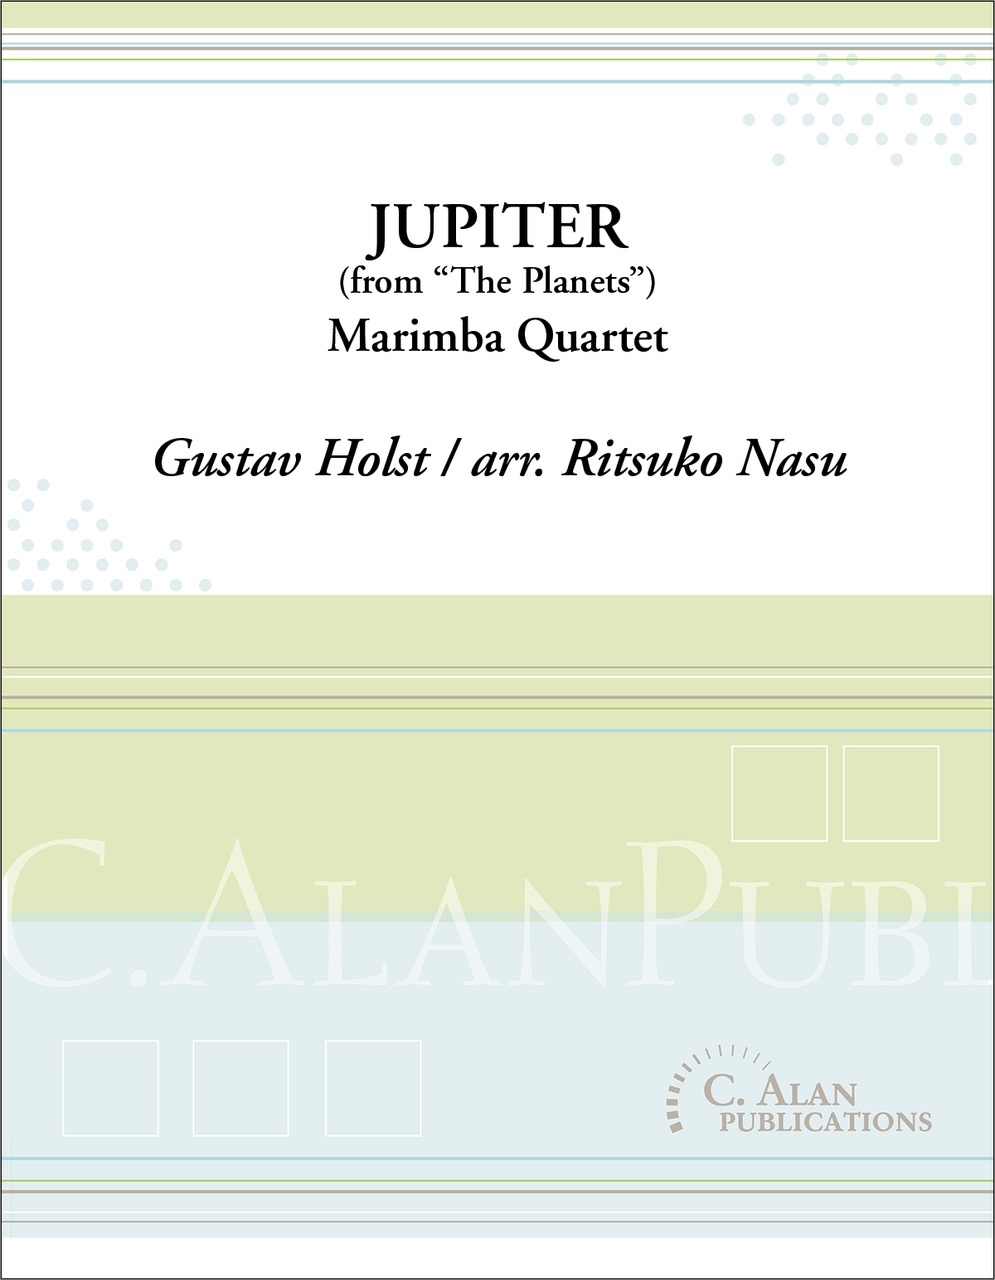 Jupiter from 'The Planets' by Holst arr. Ritsuko Nasu